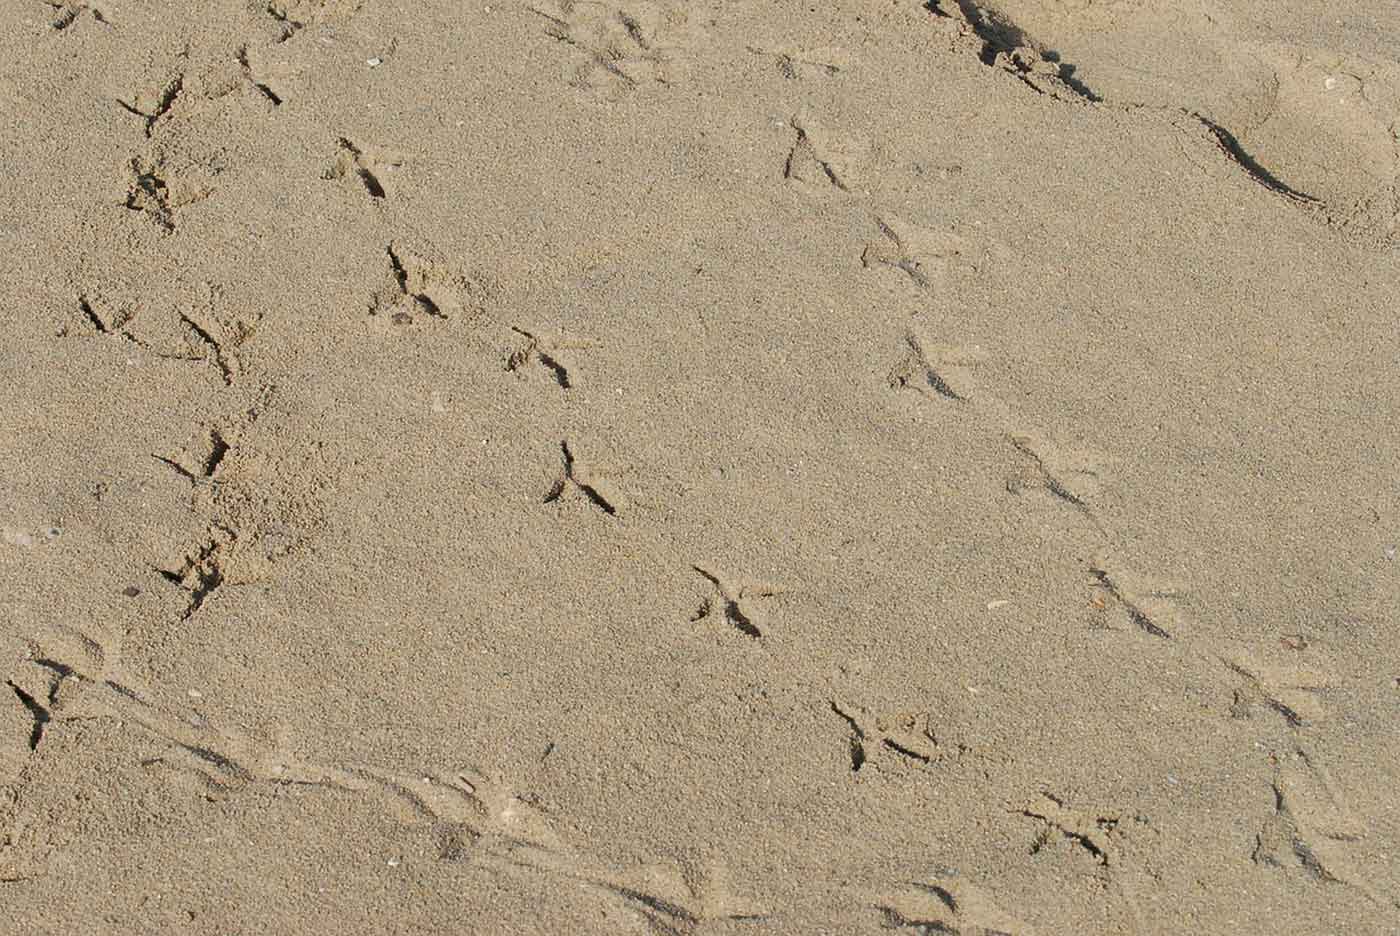 Tracks in sand